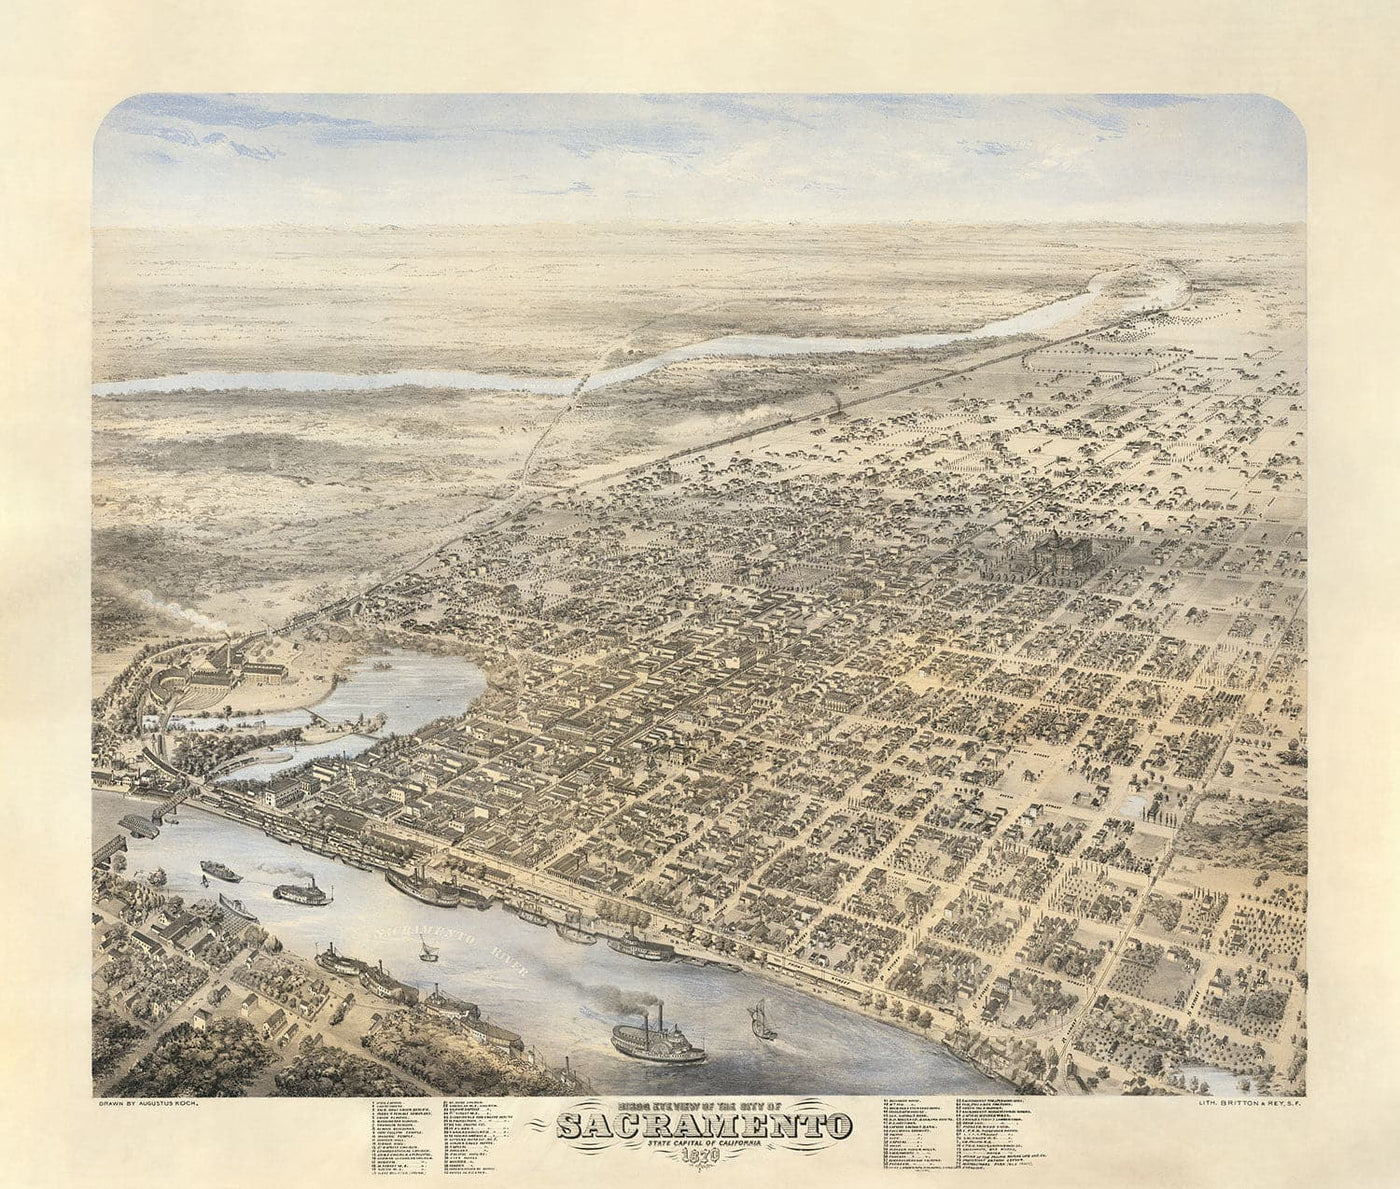 Alte Vögel SEug-Karte von Sacramento von Augustus Koch, 1870 - Downtown, Midtown, California Capitol